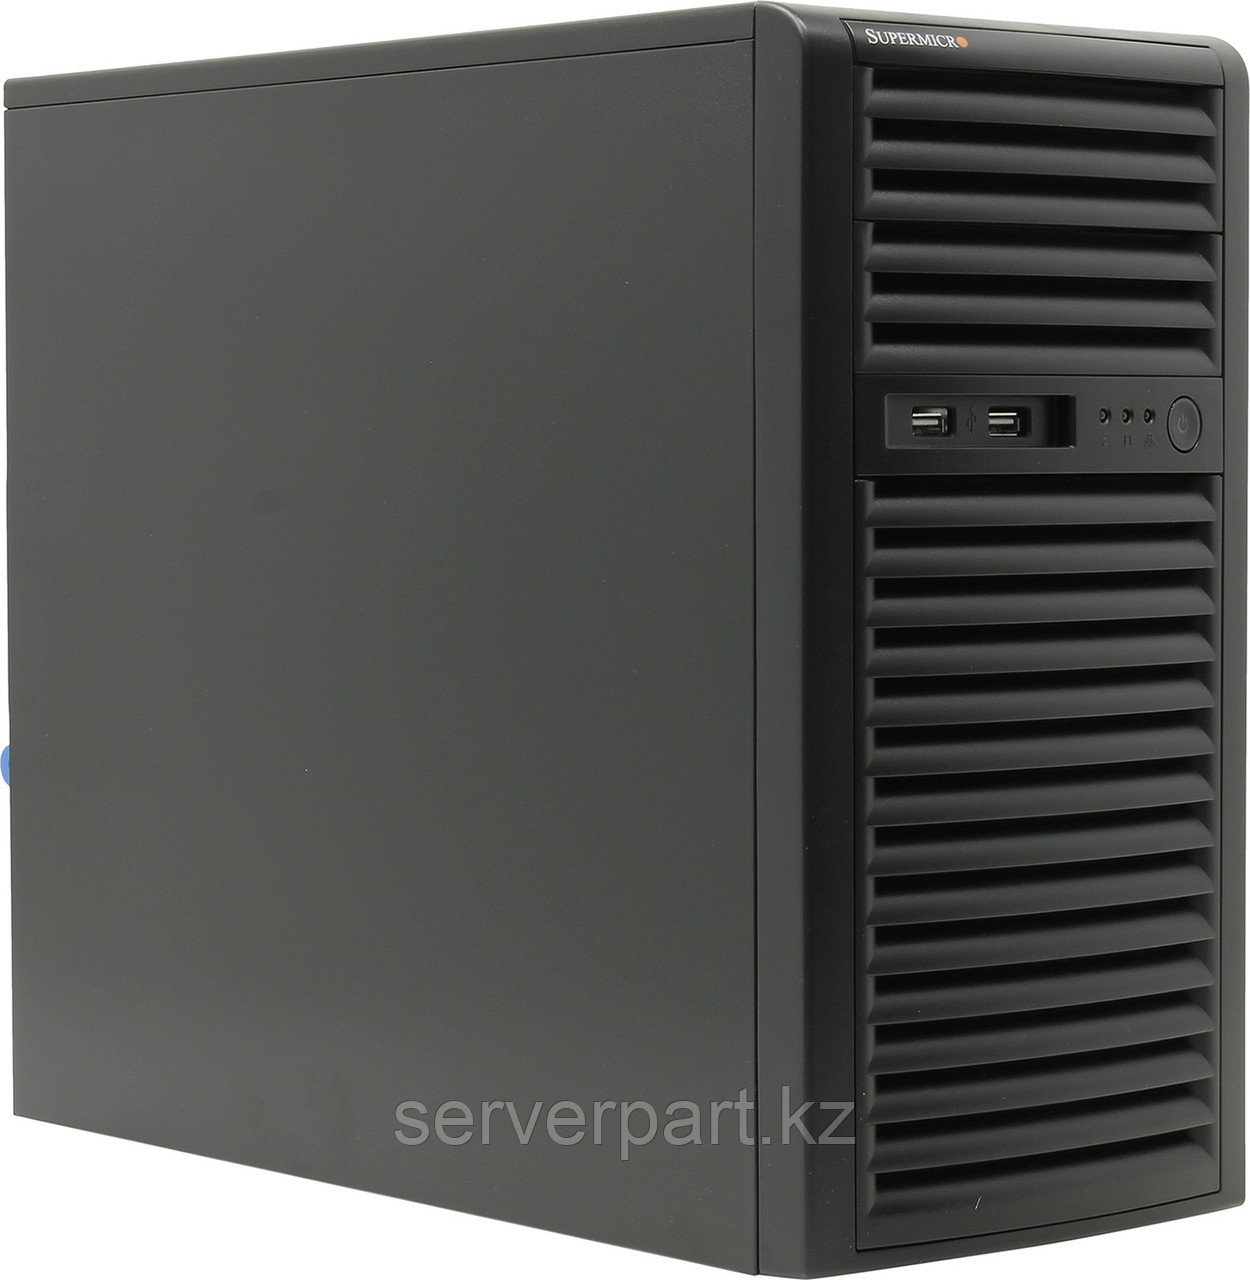 Сервер Supermicro 732-500B\X11DPL-i Tower 4LFF/1x8-core intel Xeon 4208 SC-S 2.1GHz/no RAM/no HDD